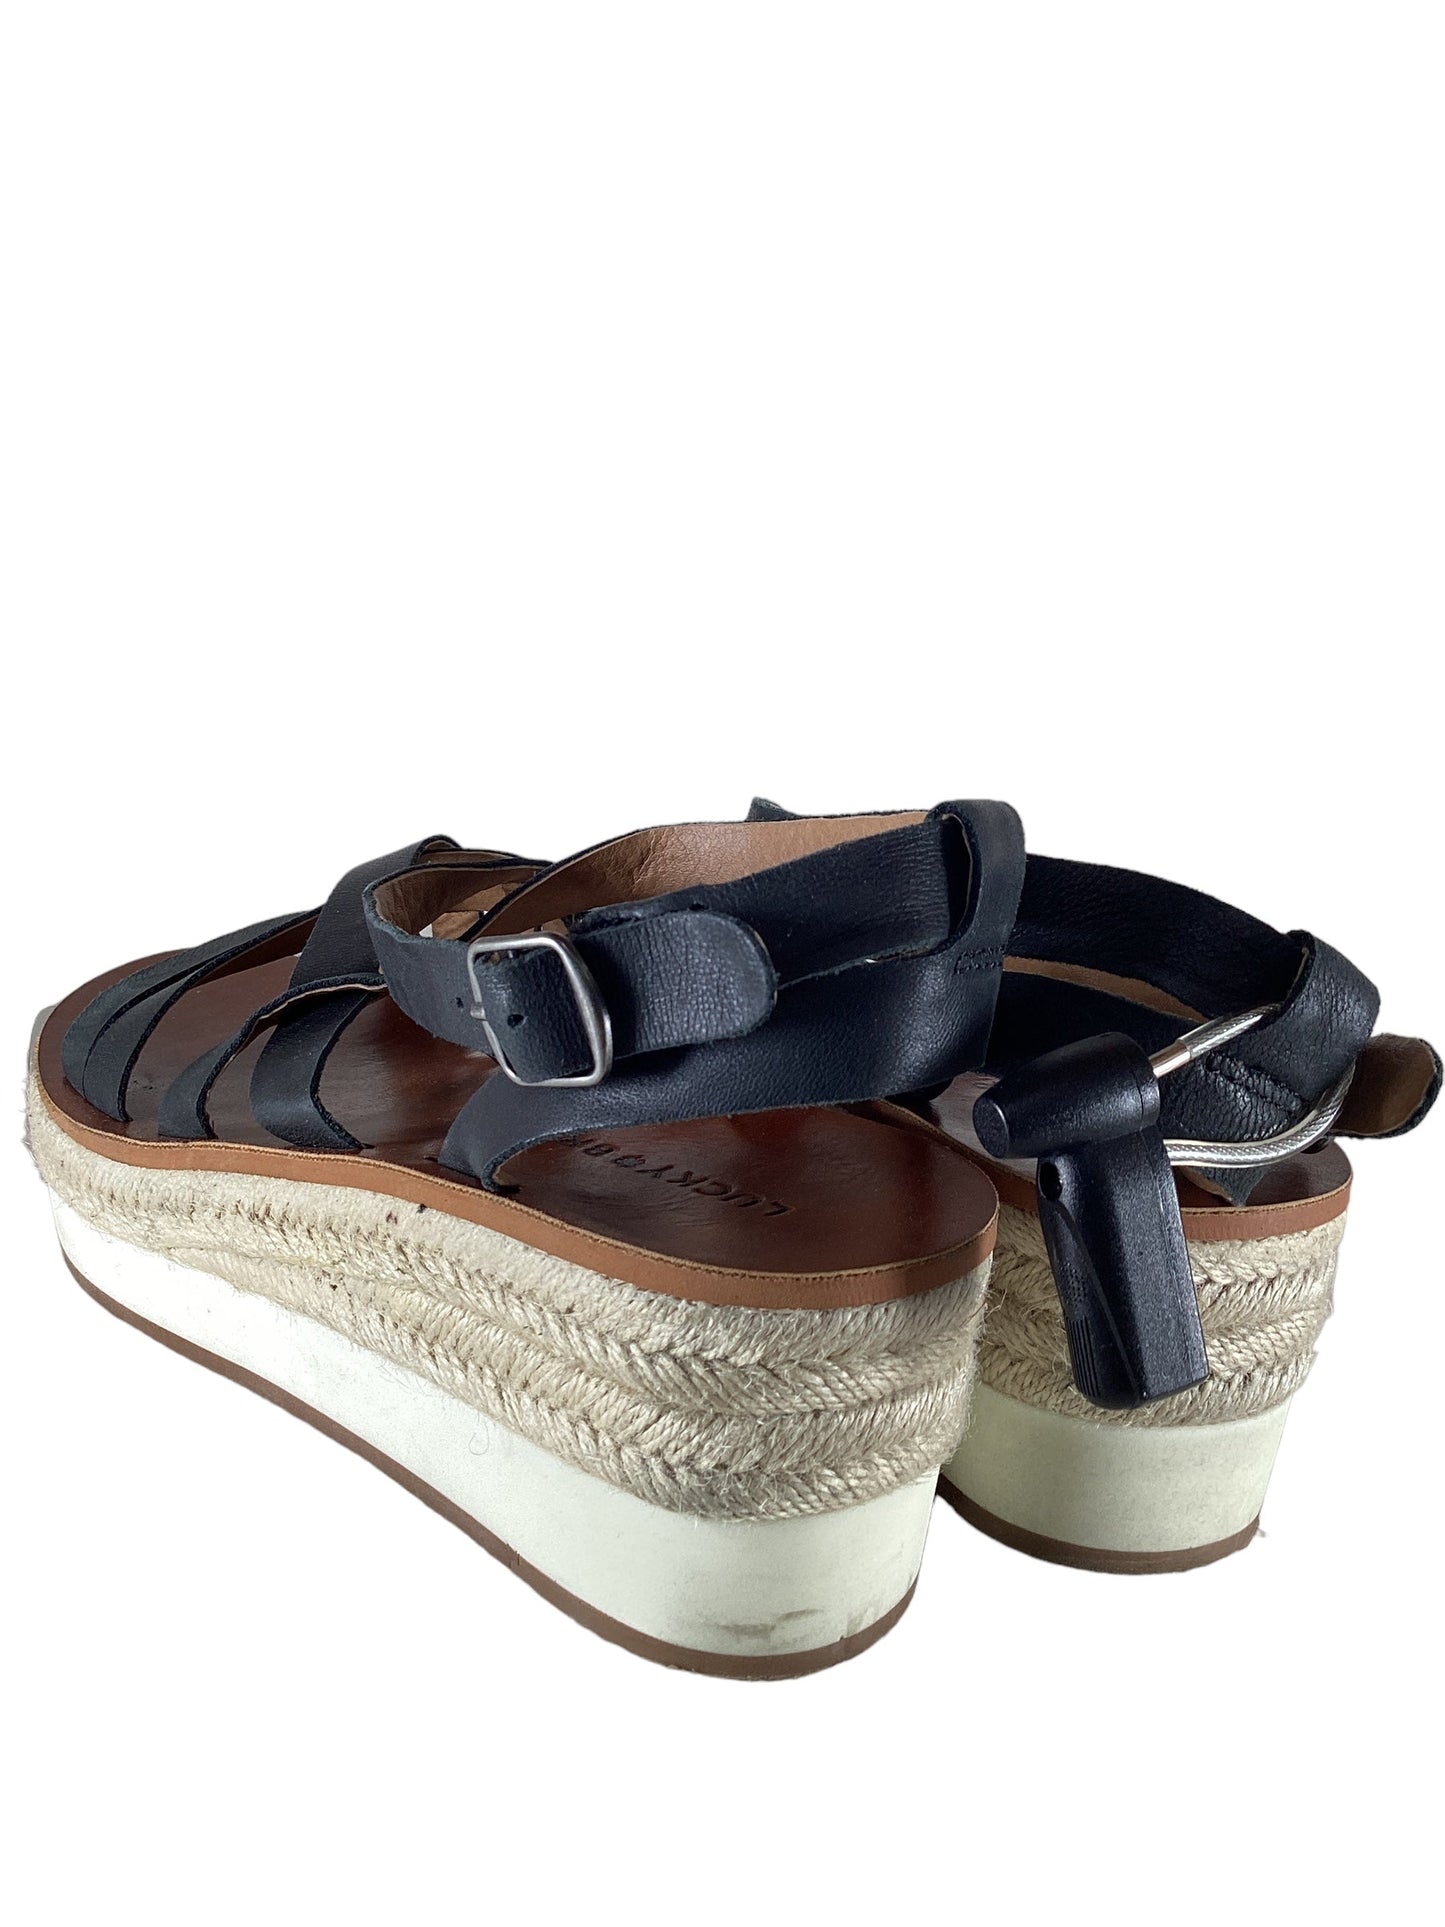 Black Sandals Heels Wedge Lucky Brand, Size 6